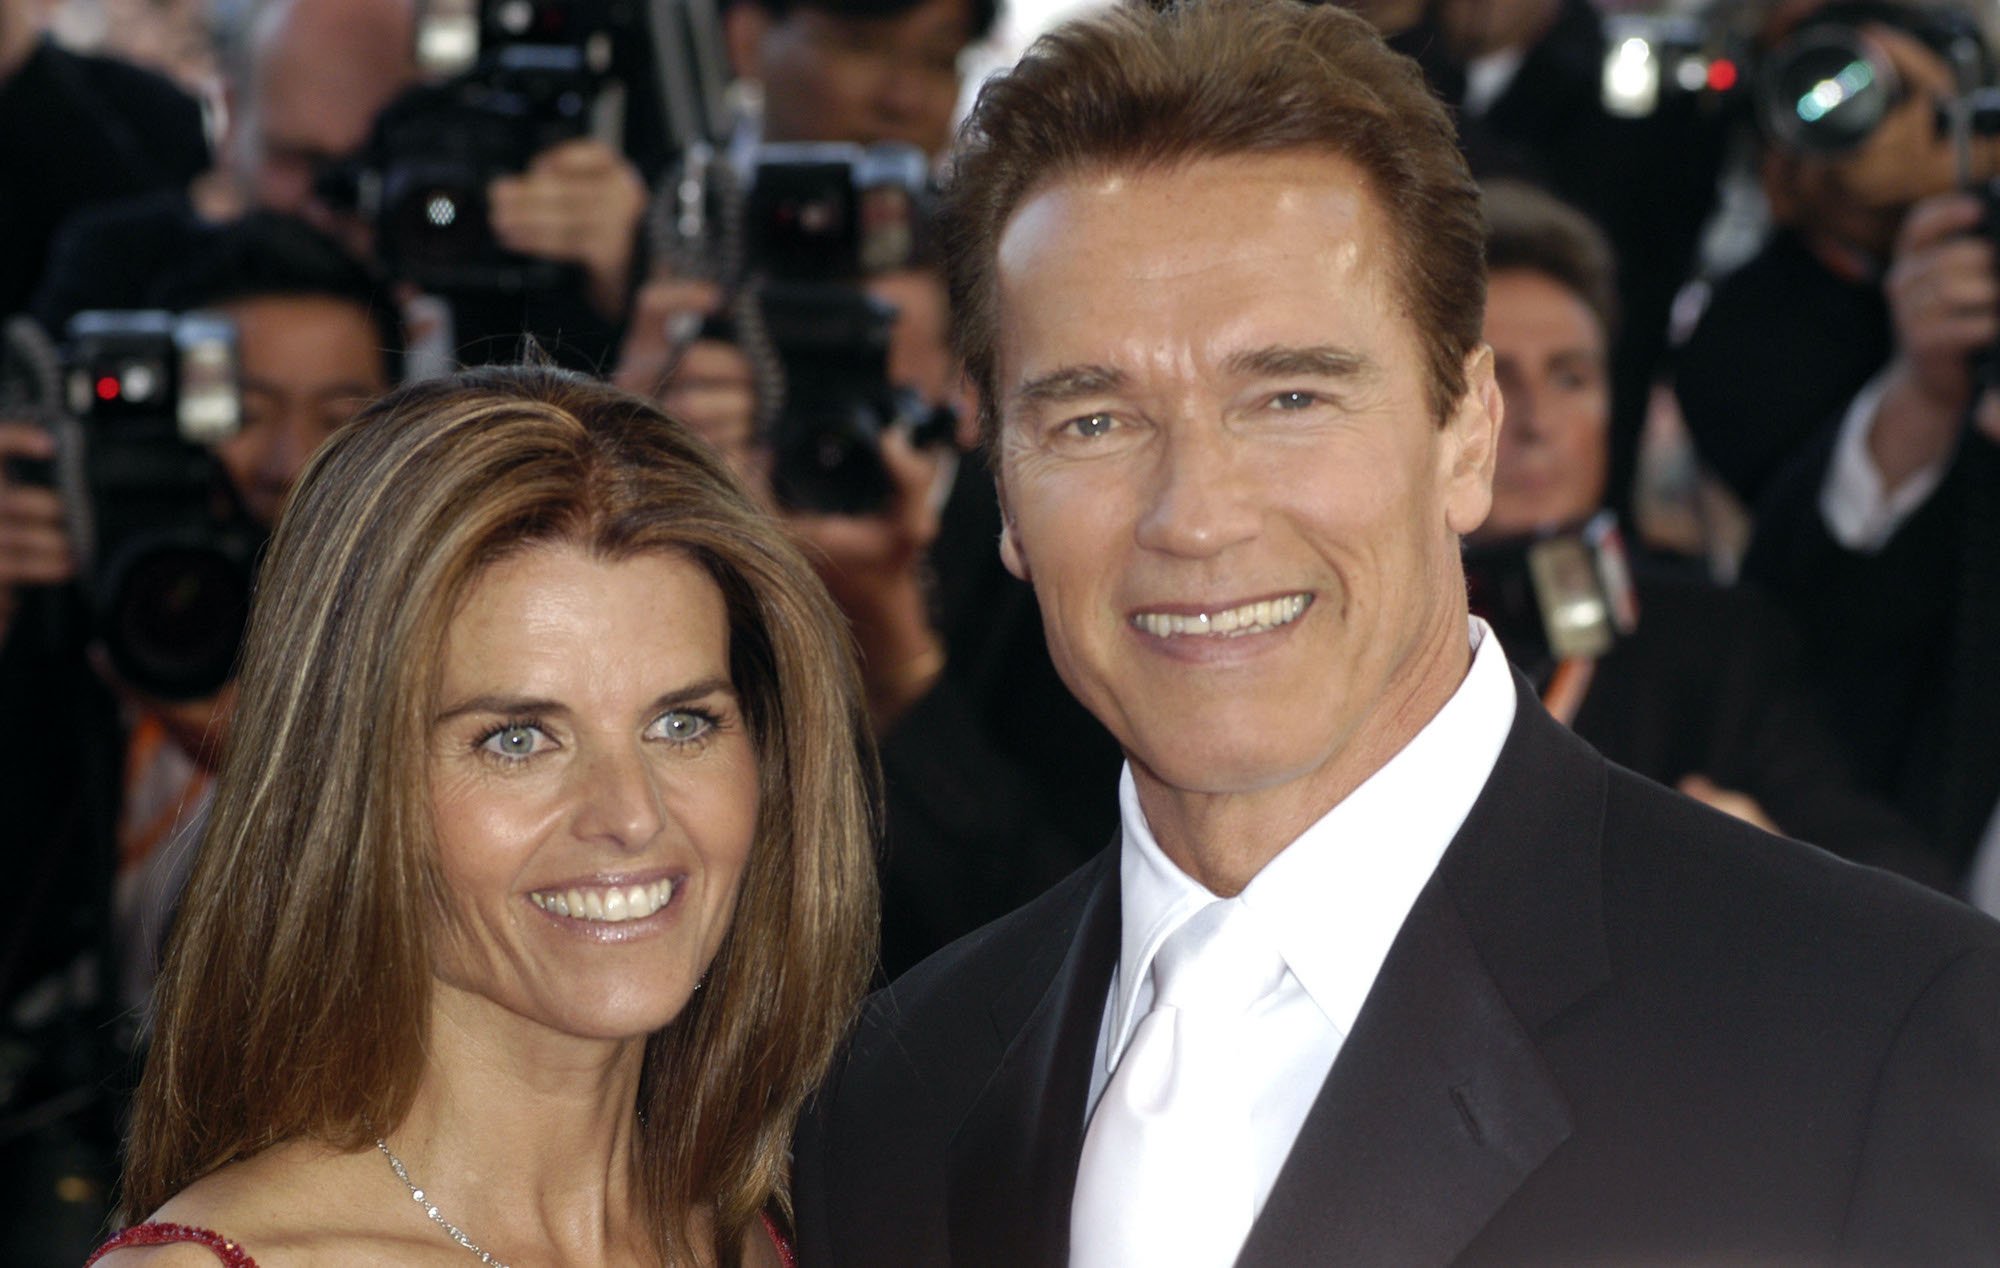 Maria Shriver and Arnold Schwarzenegger smiling